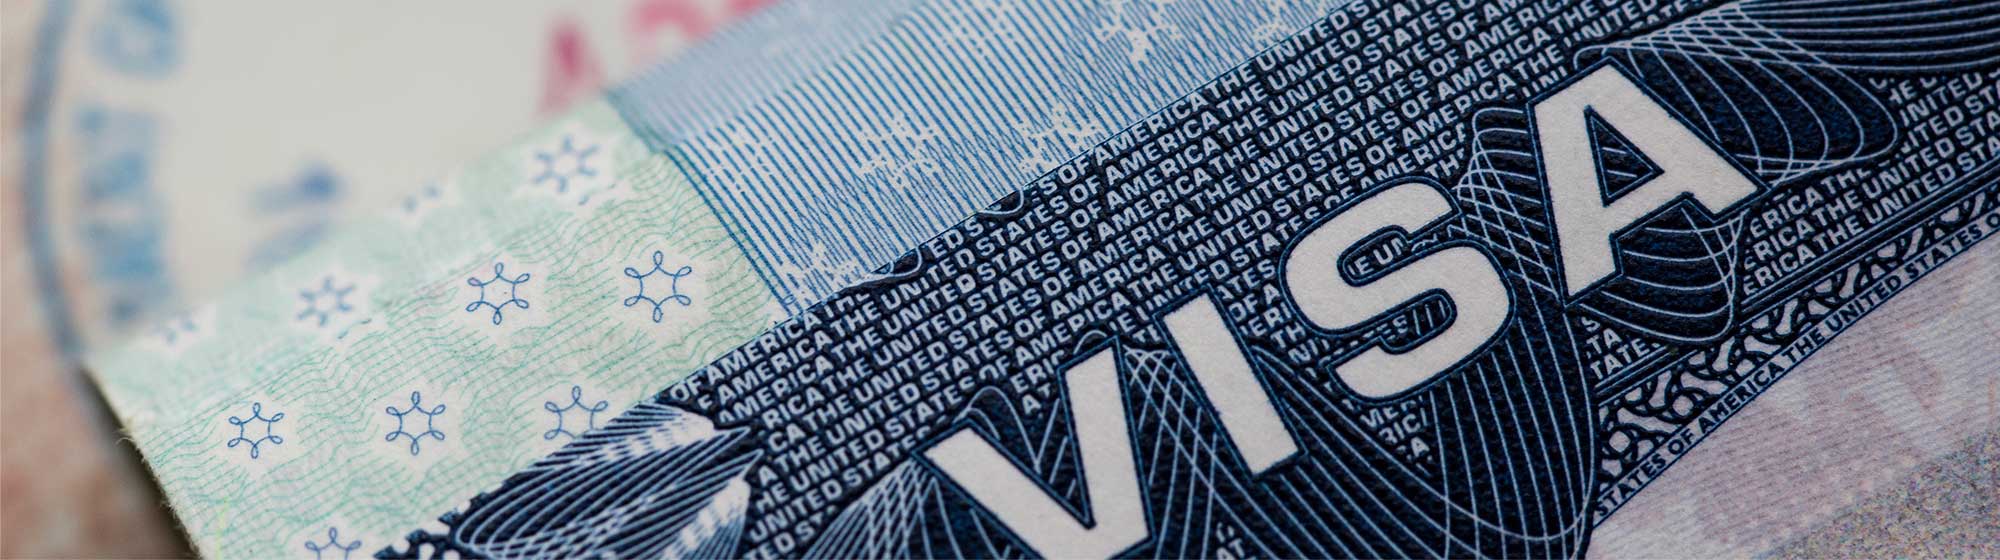 A close-up of a Visa card displaying the word "Visa"